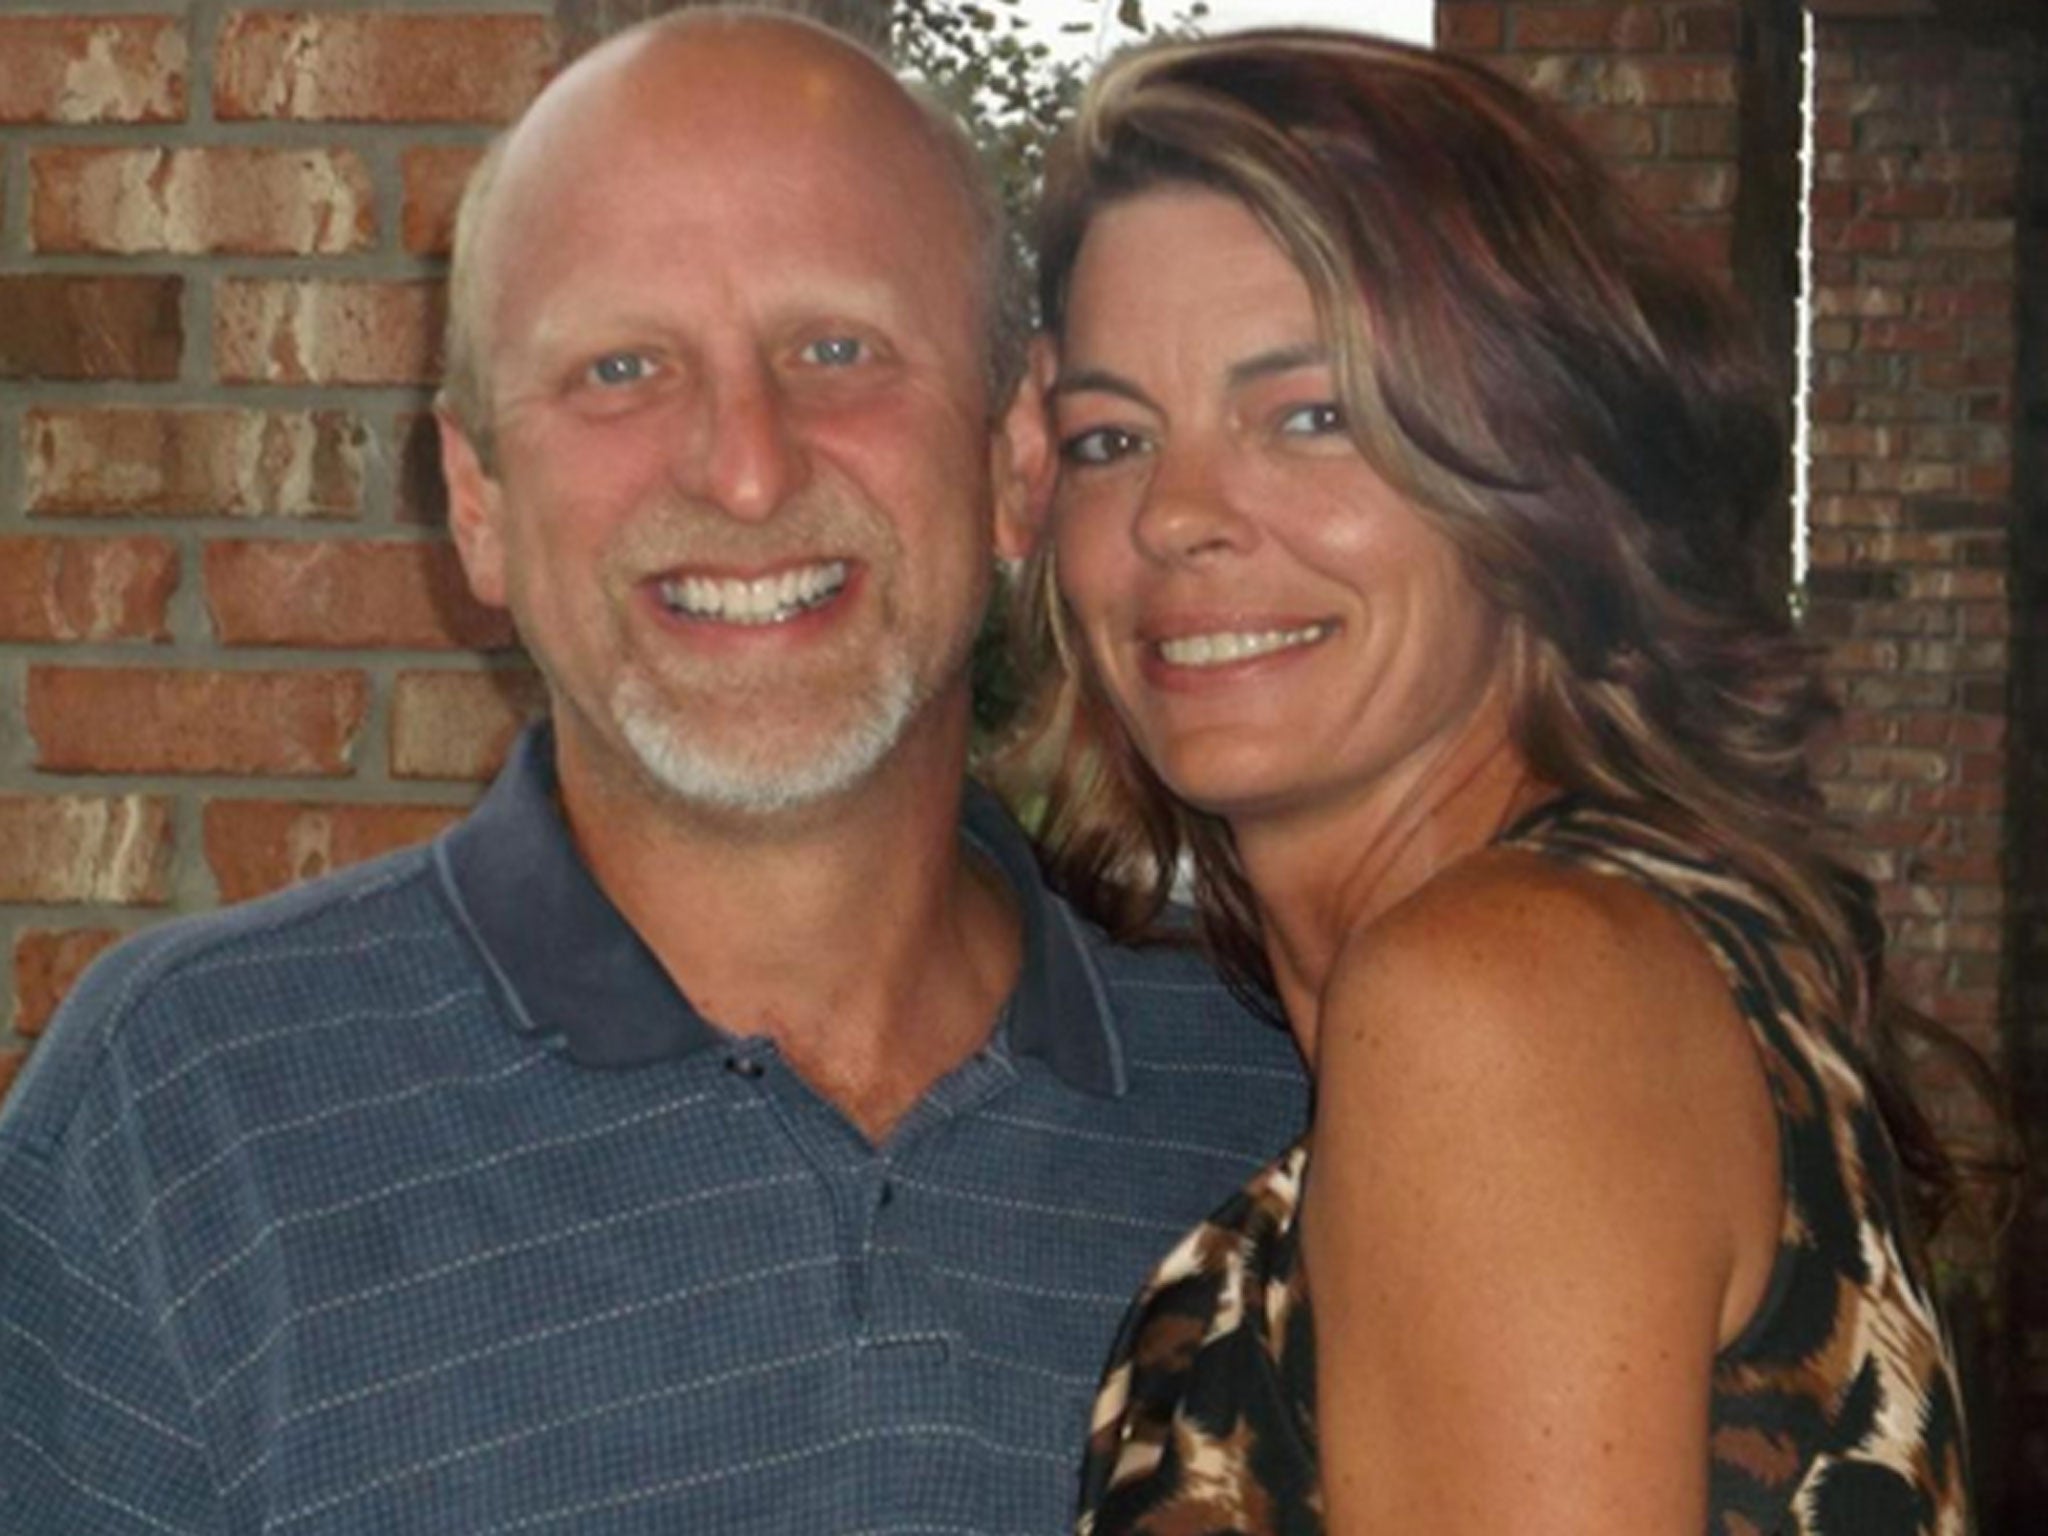 Steve Utash with his wife Starr Utash, taken in 2012.